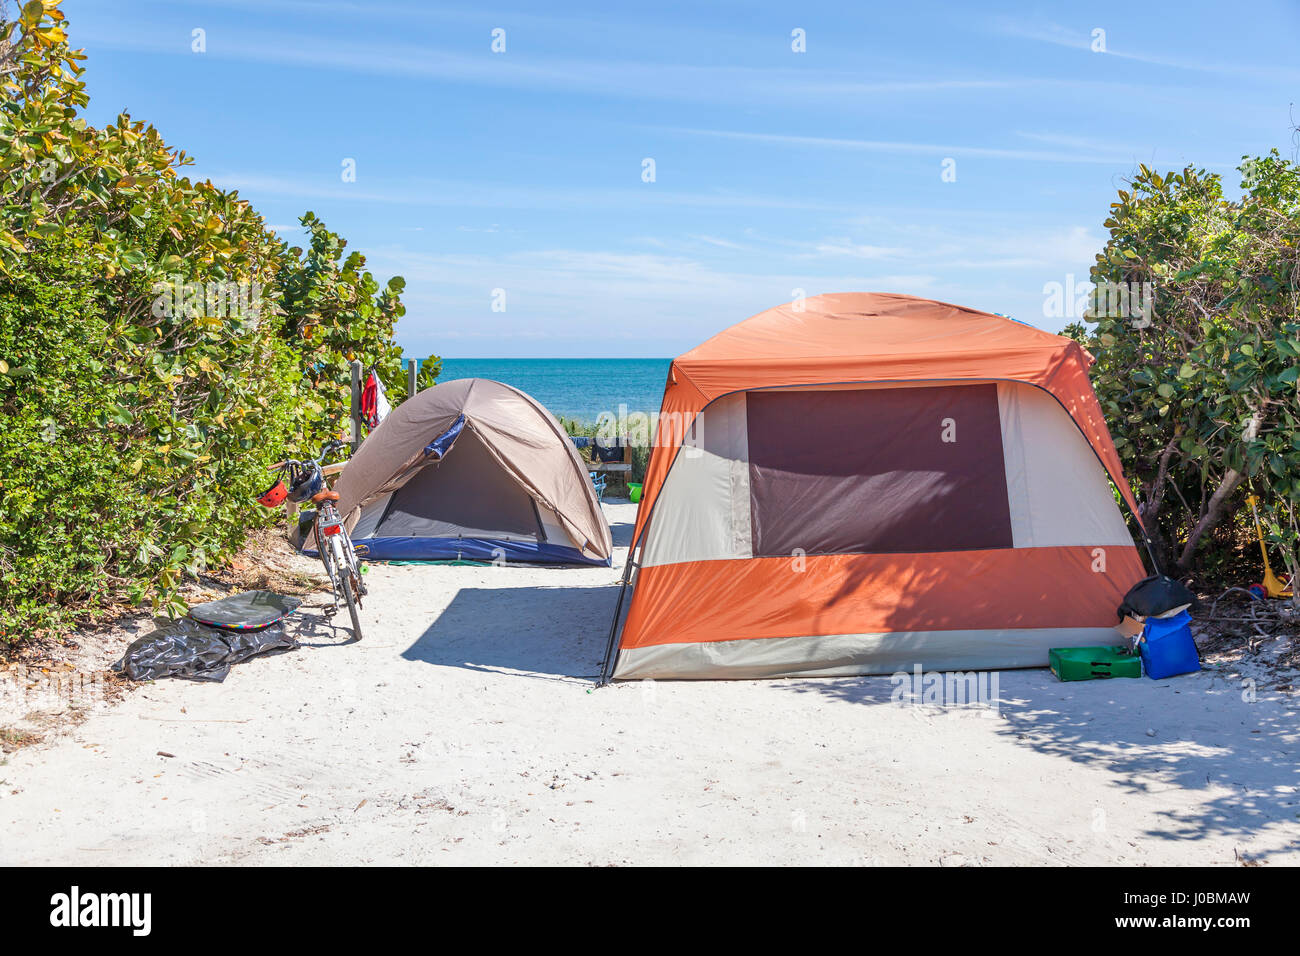 Camping at the beach in Bahia Honda state park. Florida Keys, United States Stock Photo